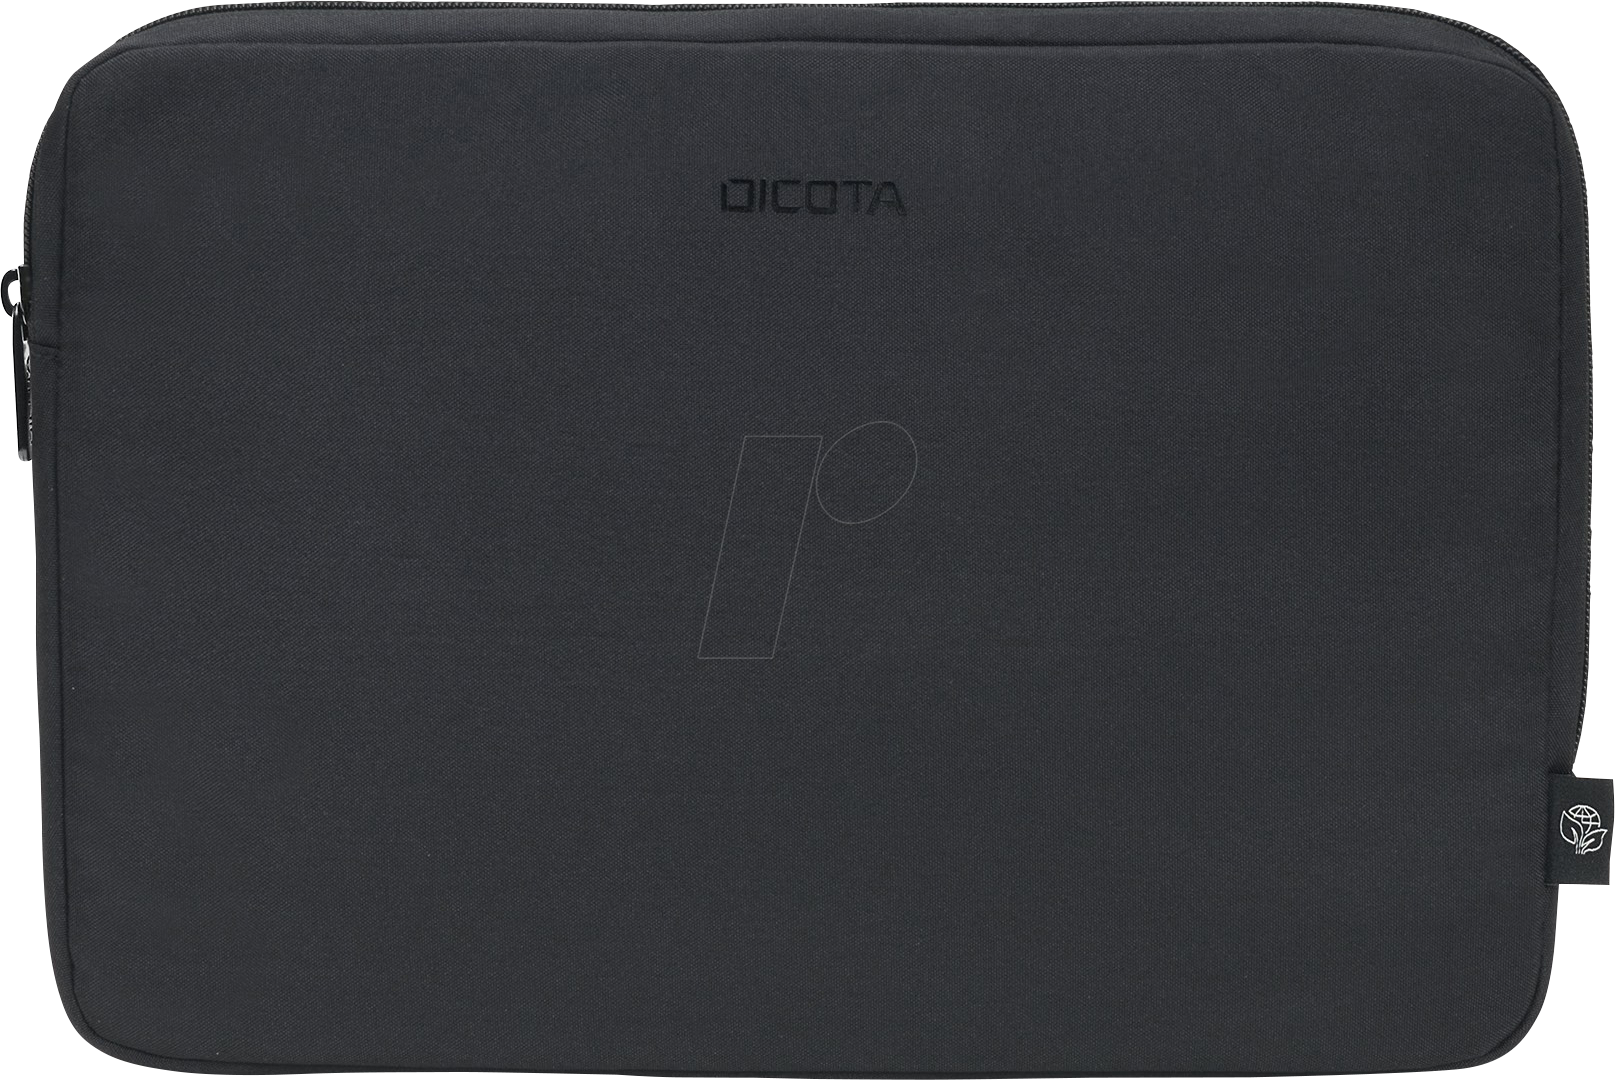 DICOTA D31825 - Laptop, Schutzhülle, ECO Sleeve BASE 14-14.1 von Dicota